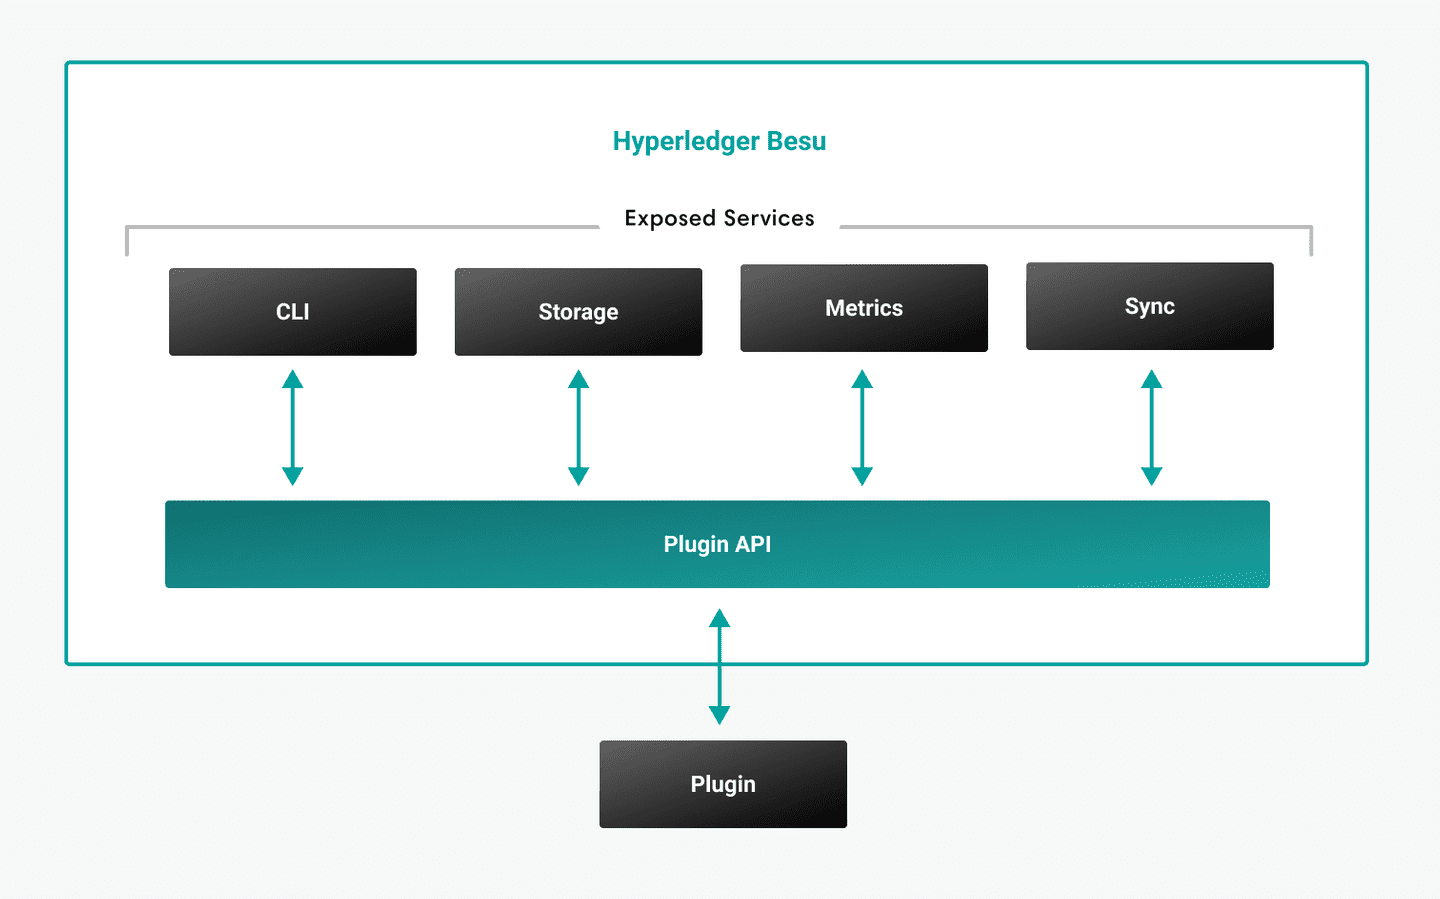 Image courtesy of Hyperledger Besu Official Documentation Guide